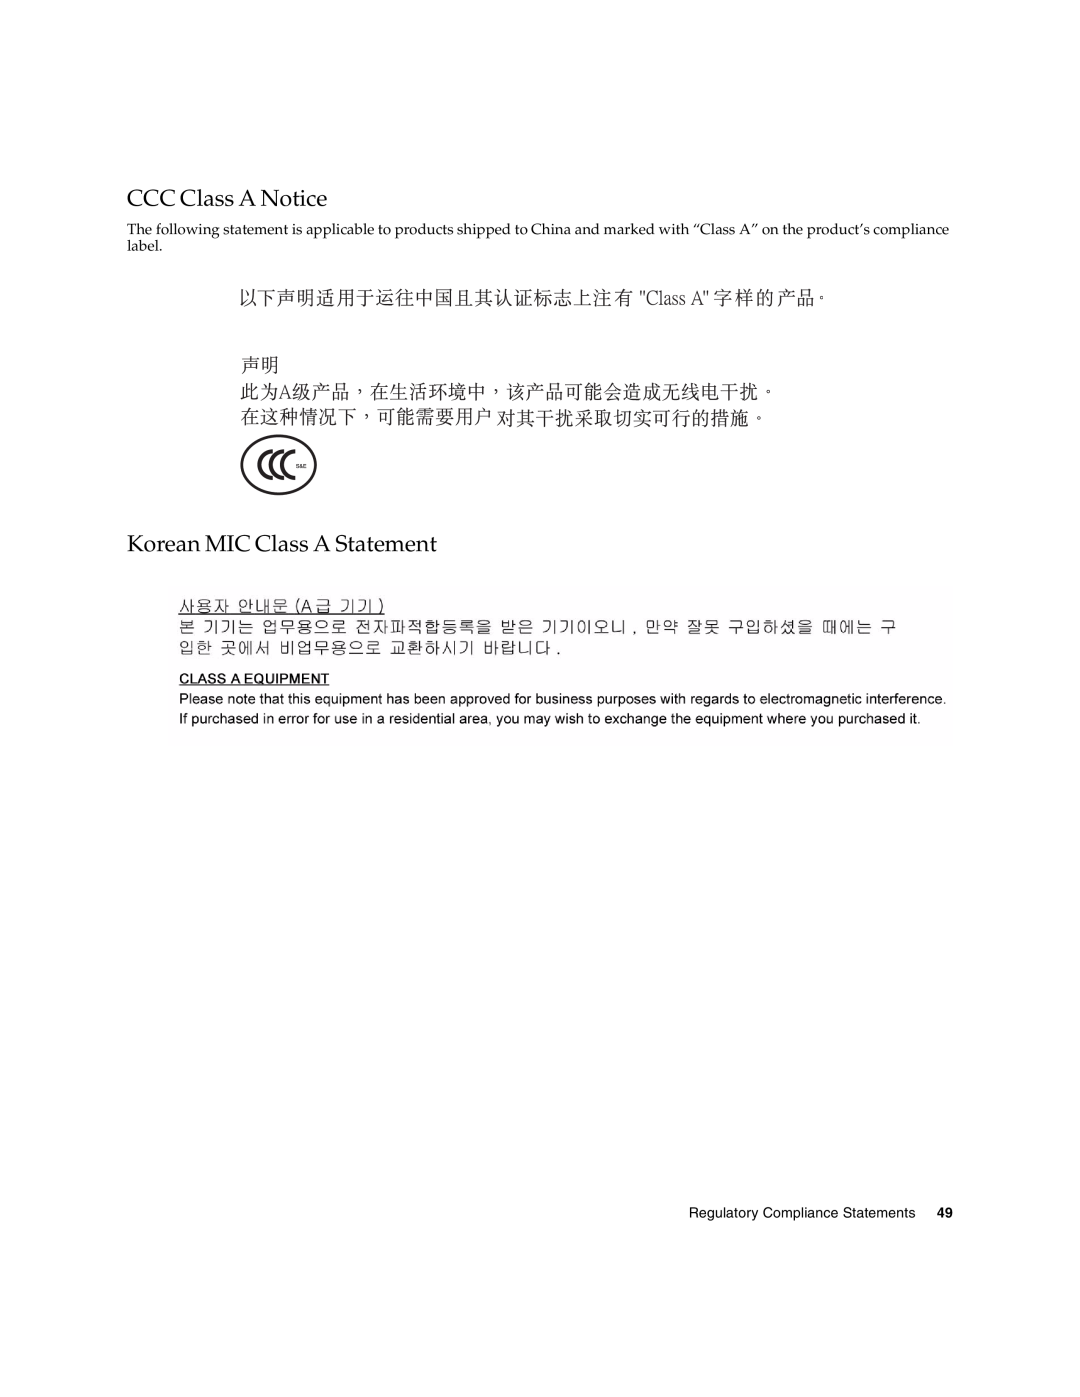 Sun Microsystems 2.0 manual CCC Class A Notice, Korean MIC Class A Statement, Regulatory Compliance Statements 